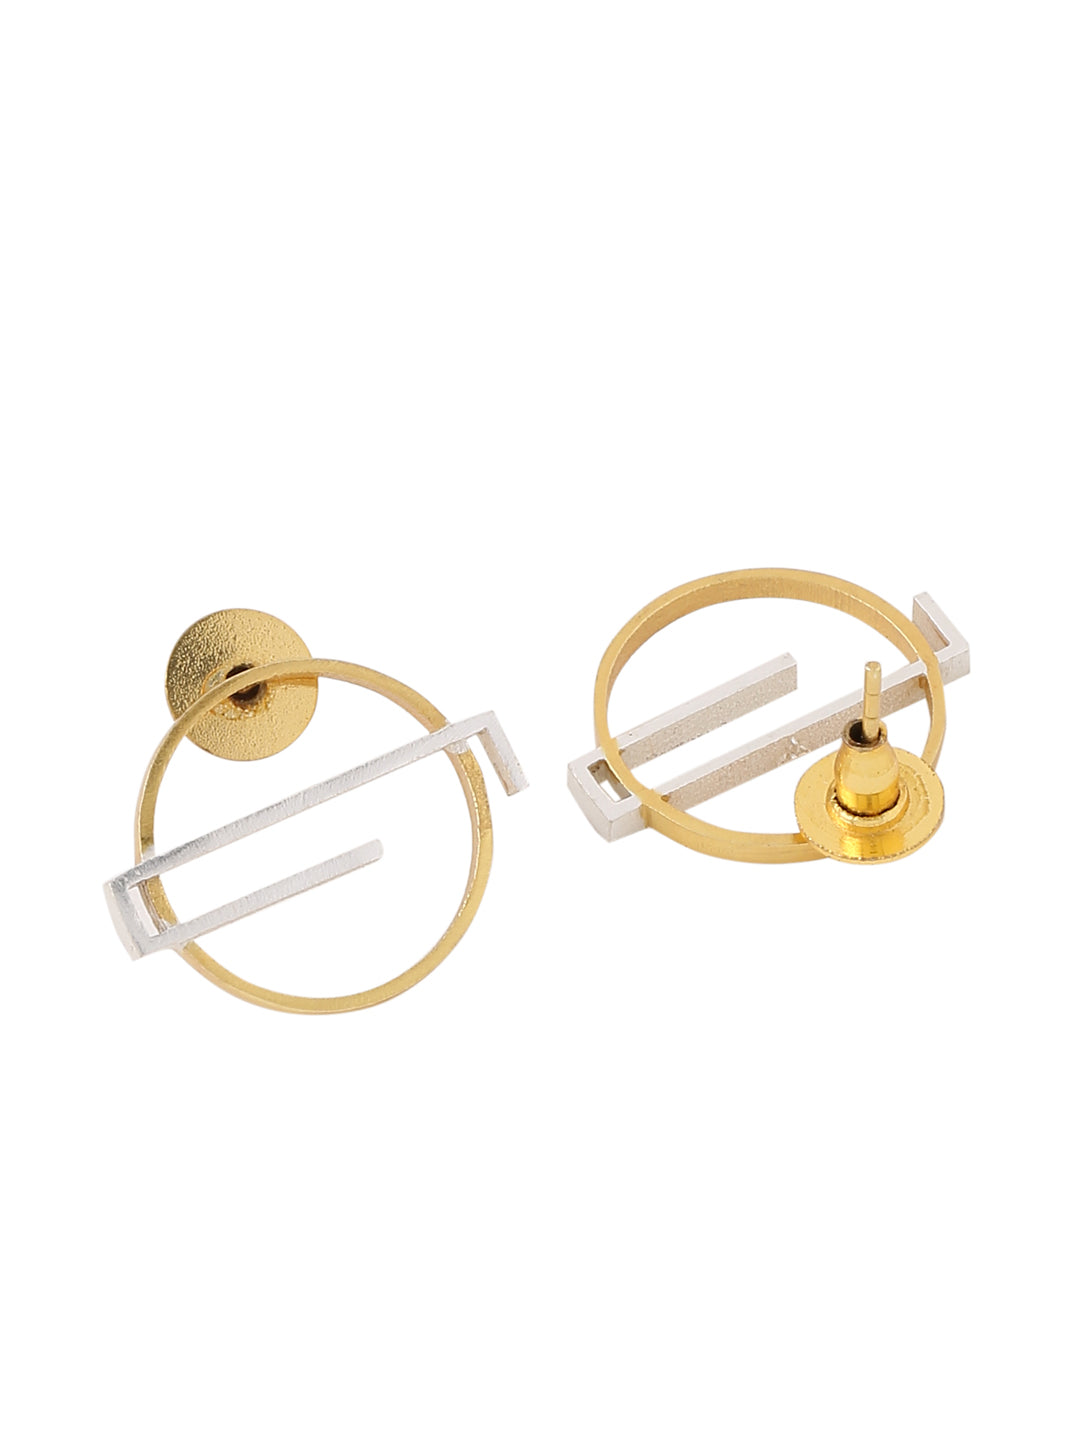 Curio Earrings - Gold/Silver